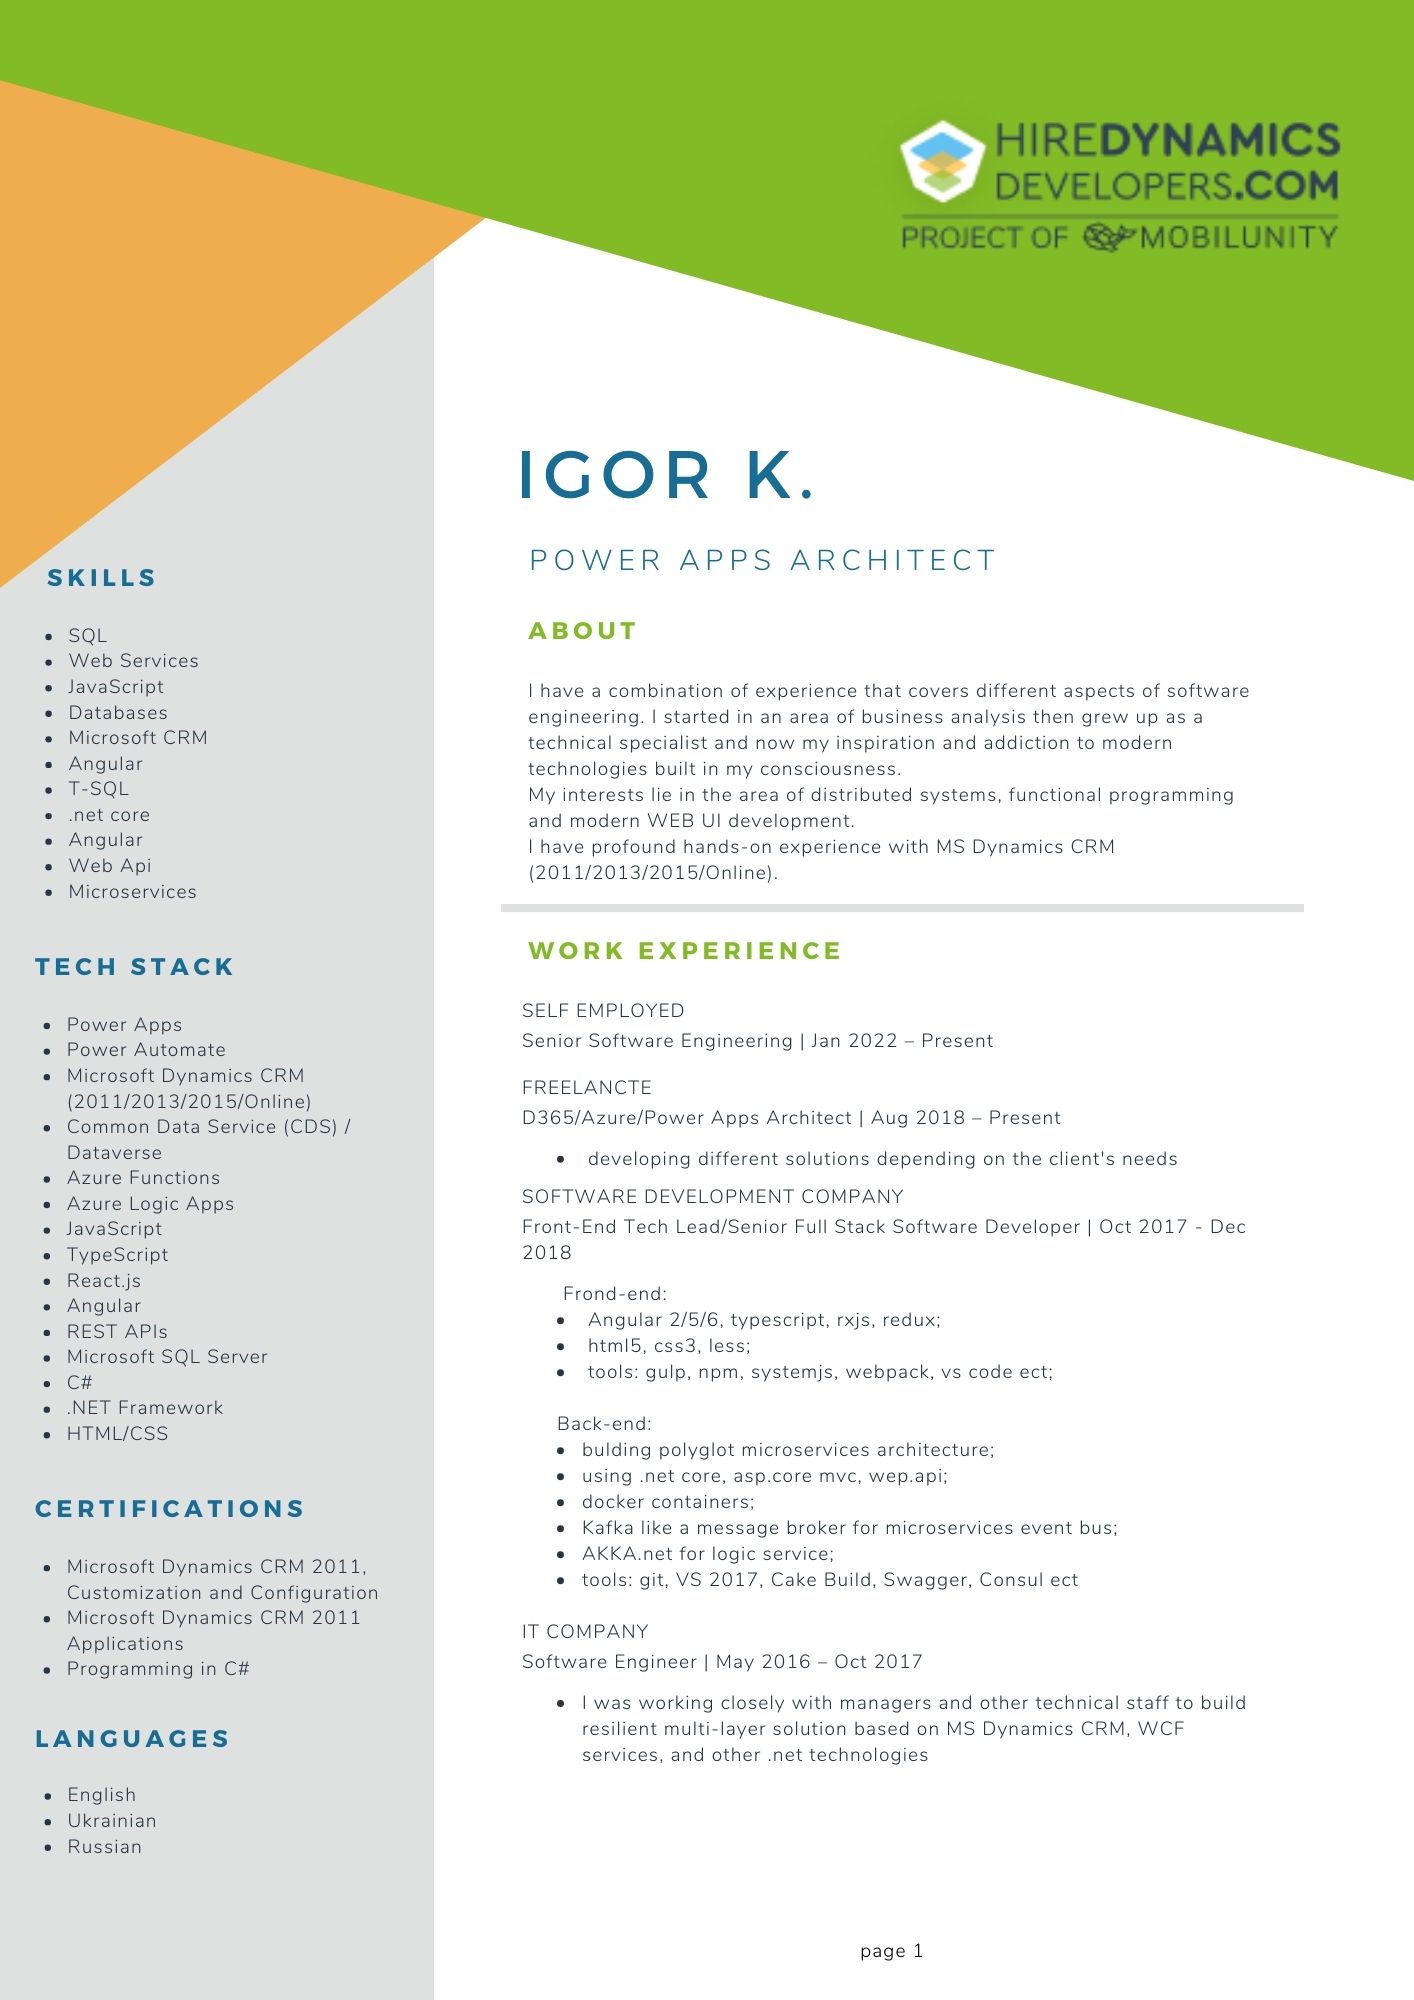 Ihor K. – Power Apps Architect